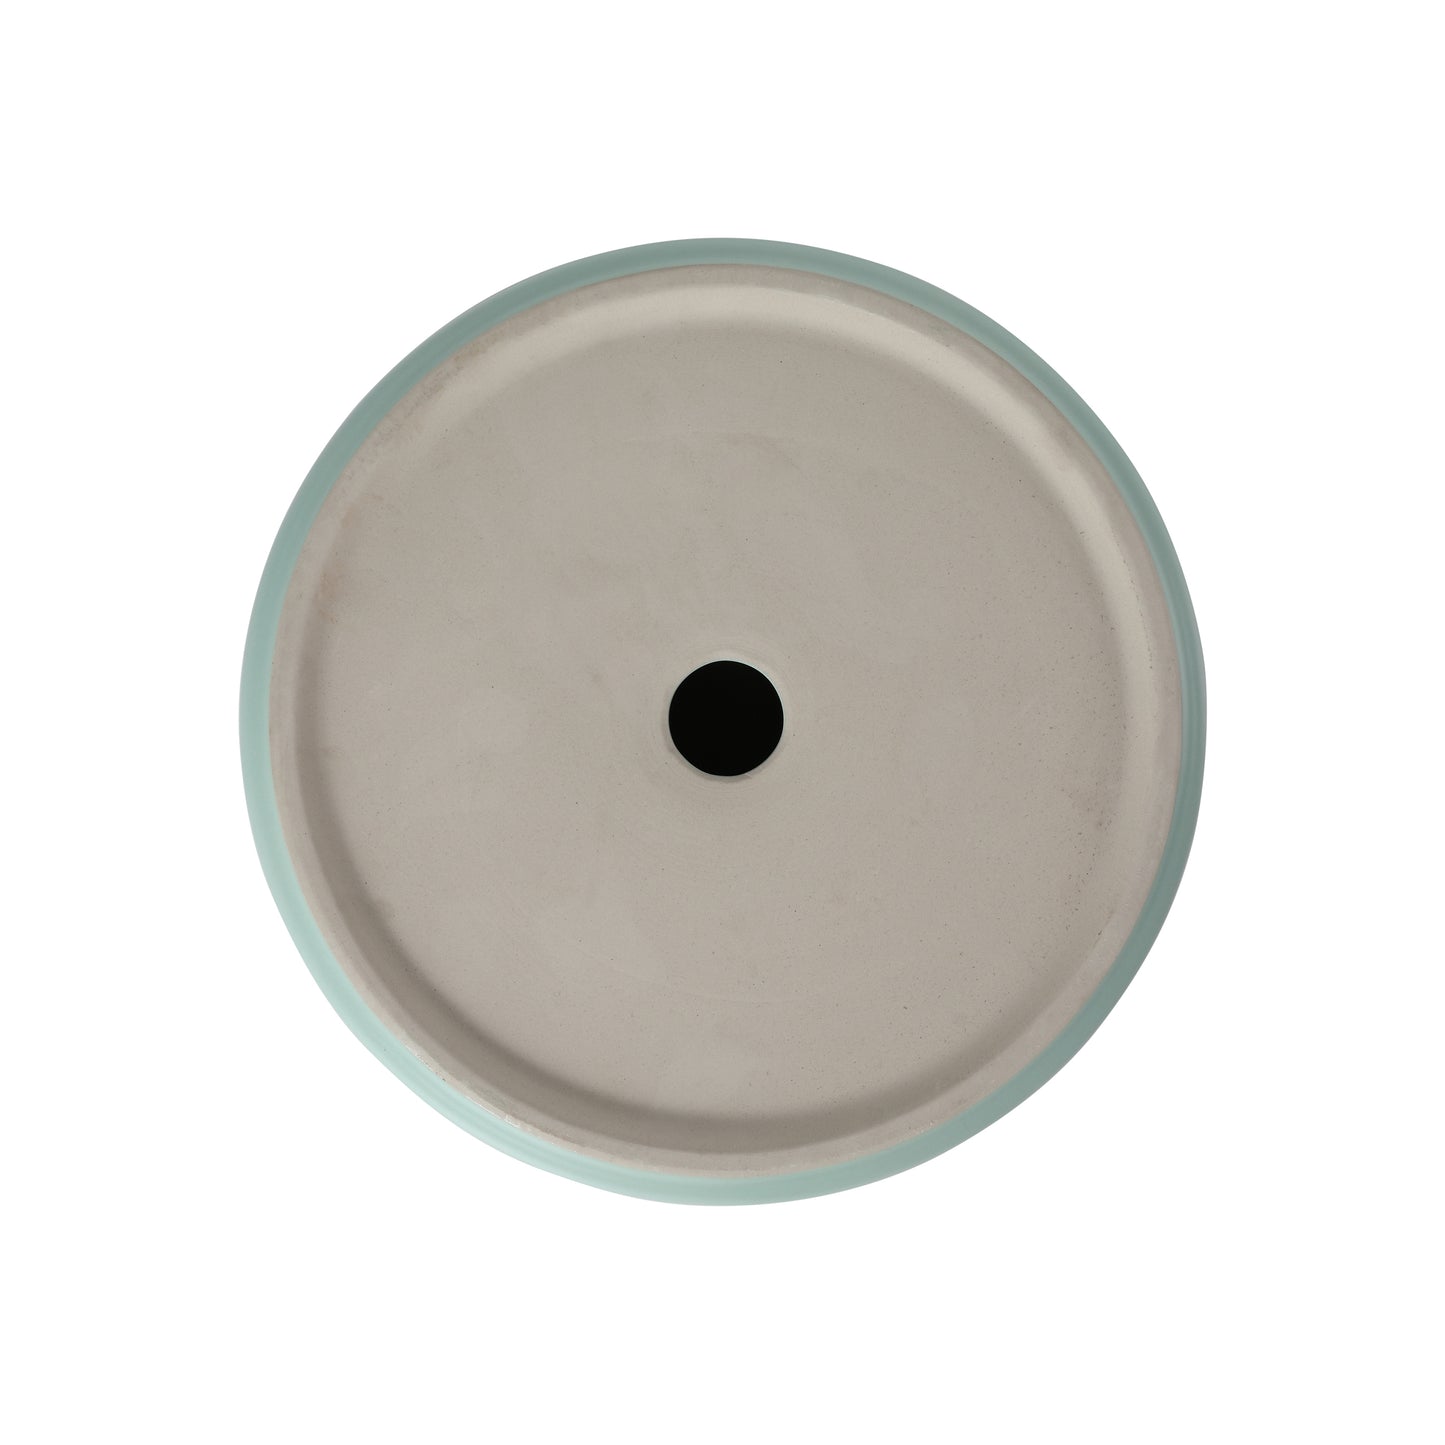 Ceramic Circular Vessel Bathroom Sink